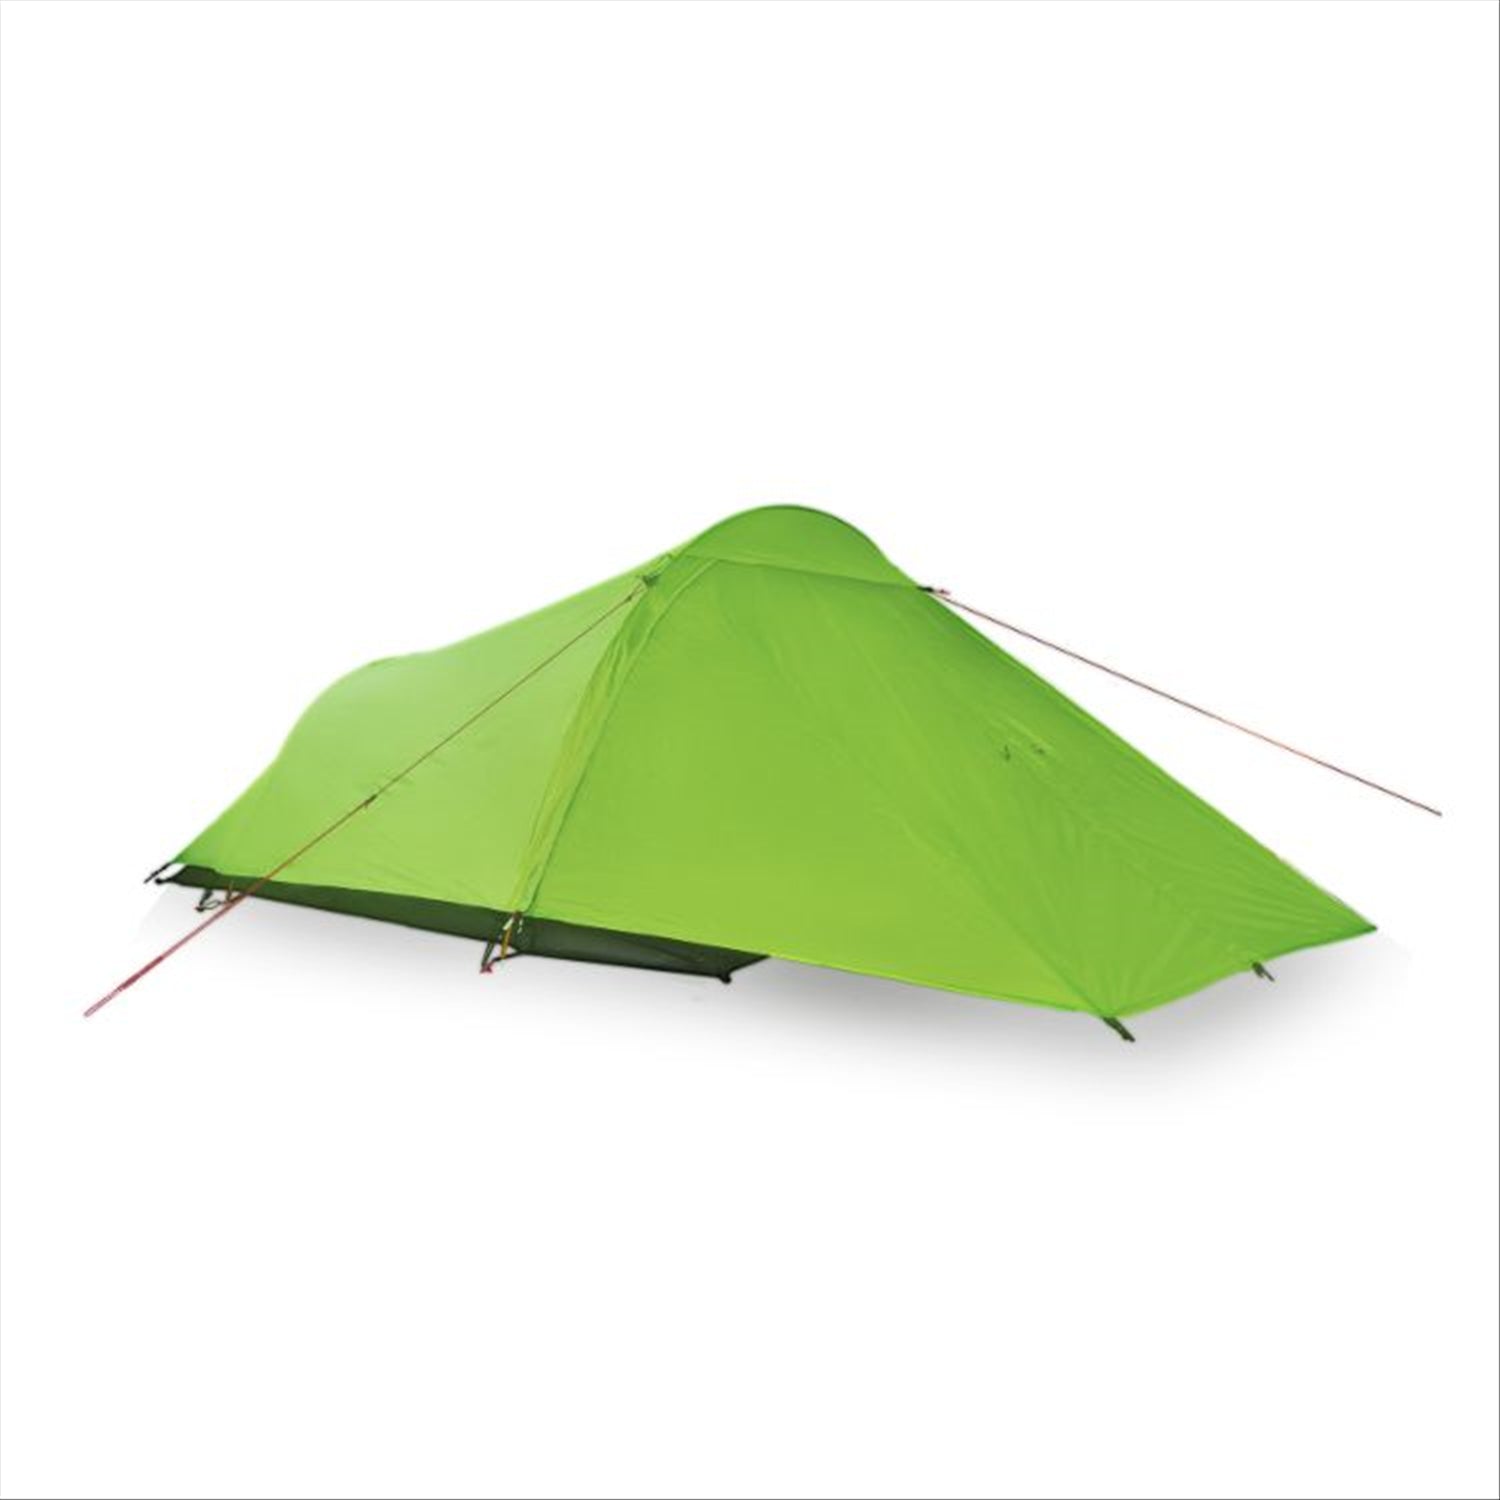 Orson Orson Ranger 2 - Lightweight 2 Person Backpacking Tent, 2kg